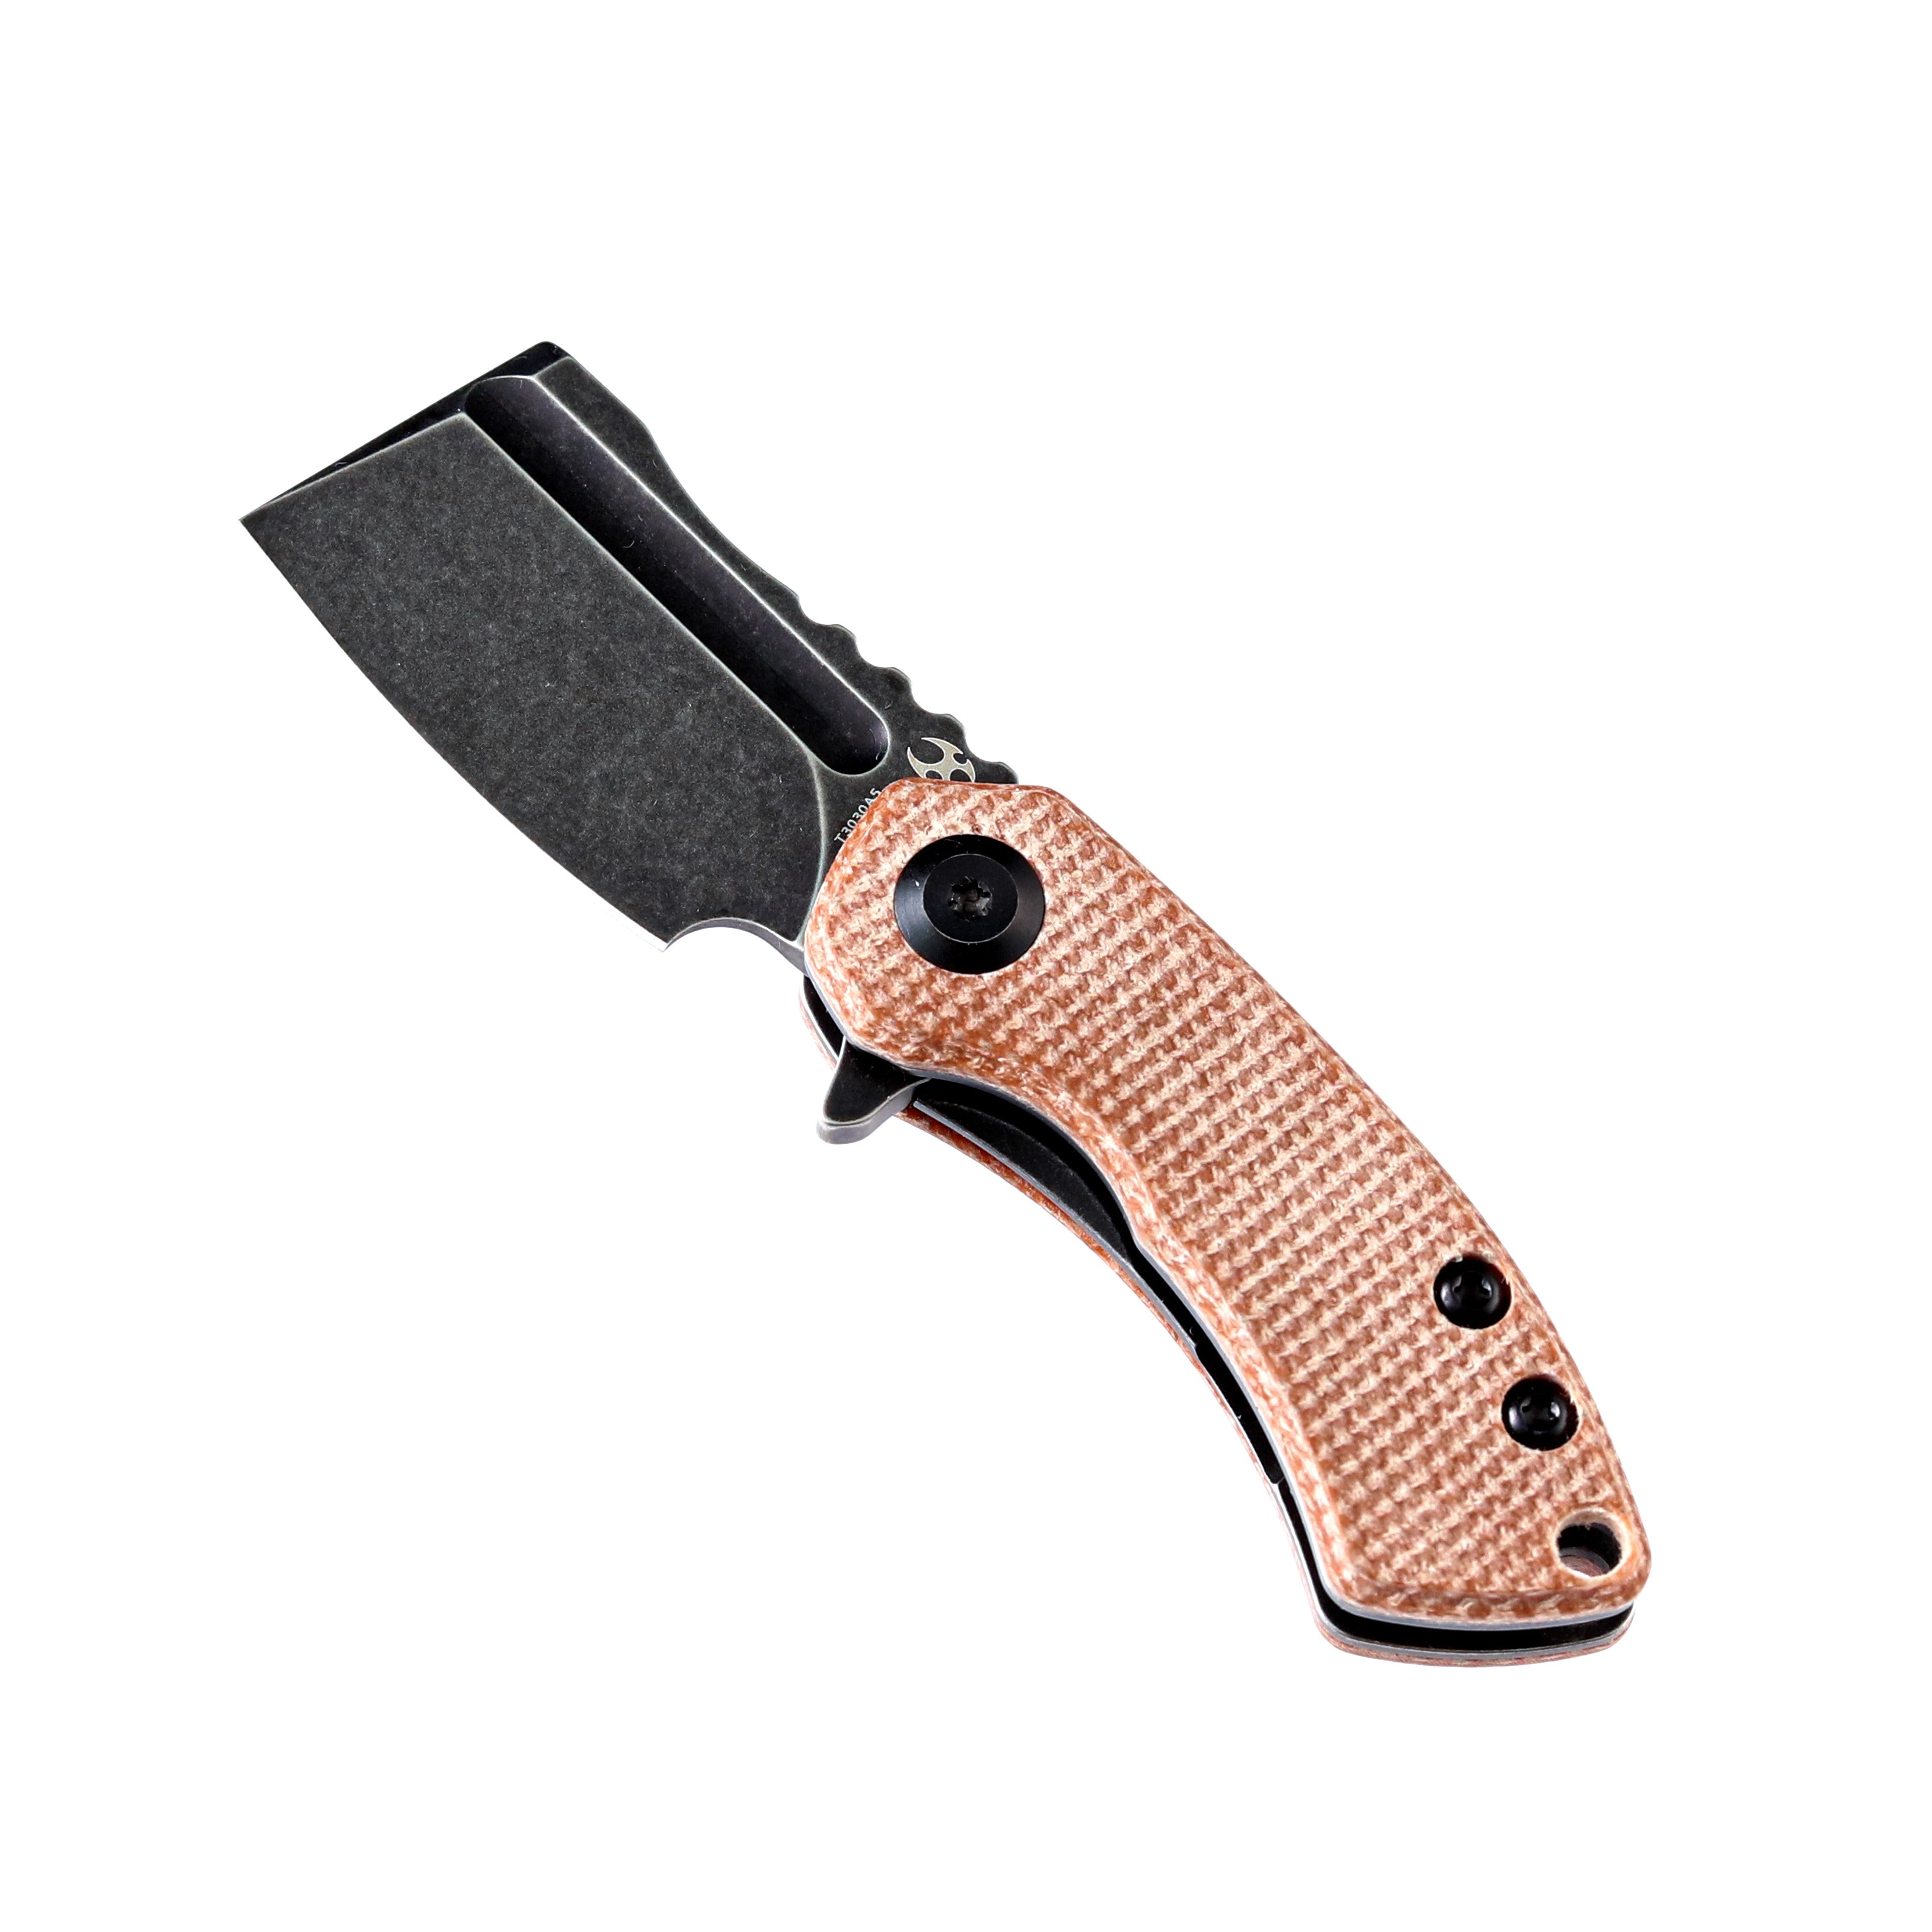 Kansept Knives T3030A5 Mini Korvid 154CM Blade Micarta Handle Liner Lock Edc Knives